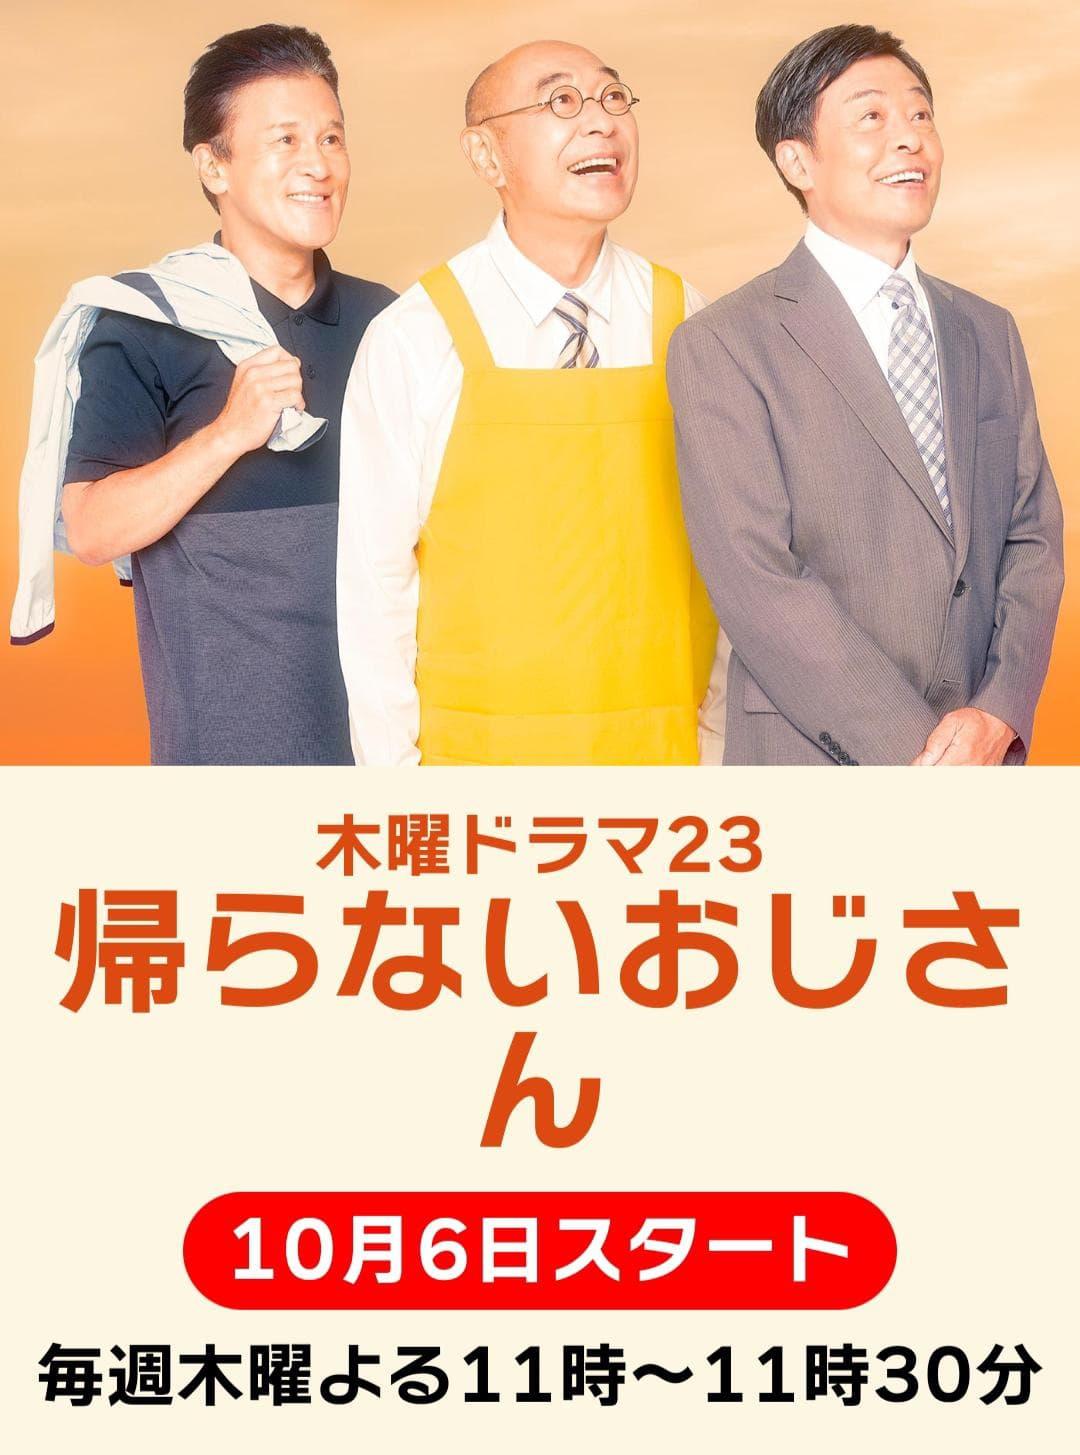 TV ratings for Kaeranai Ojisan (帰らないおじさん) in South Africa. tbs TV series